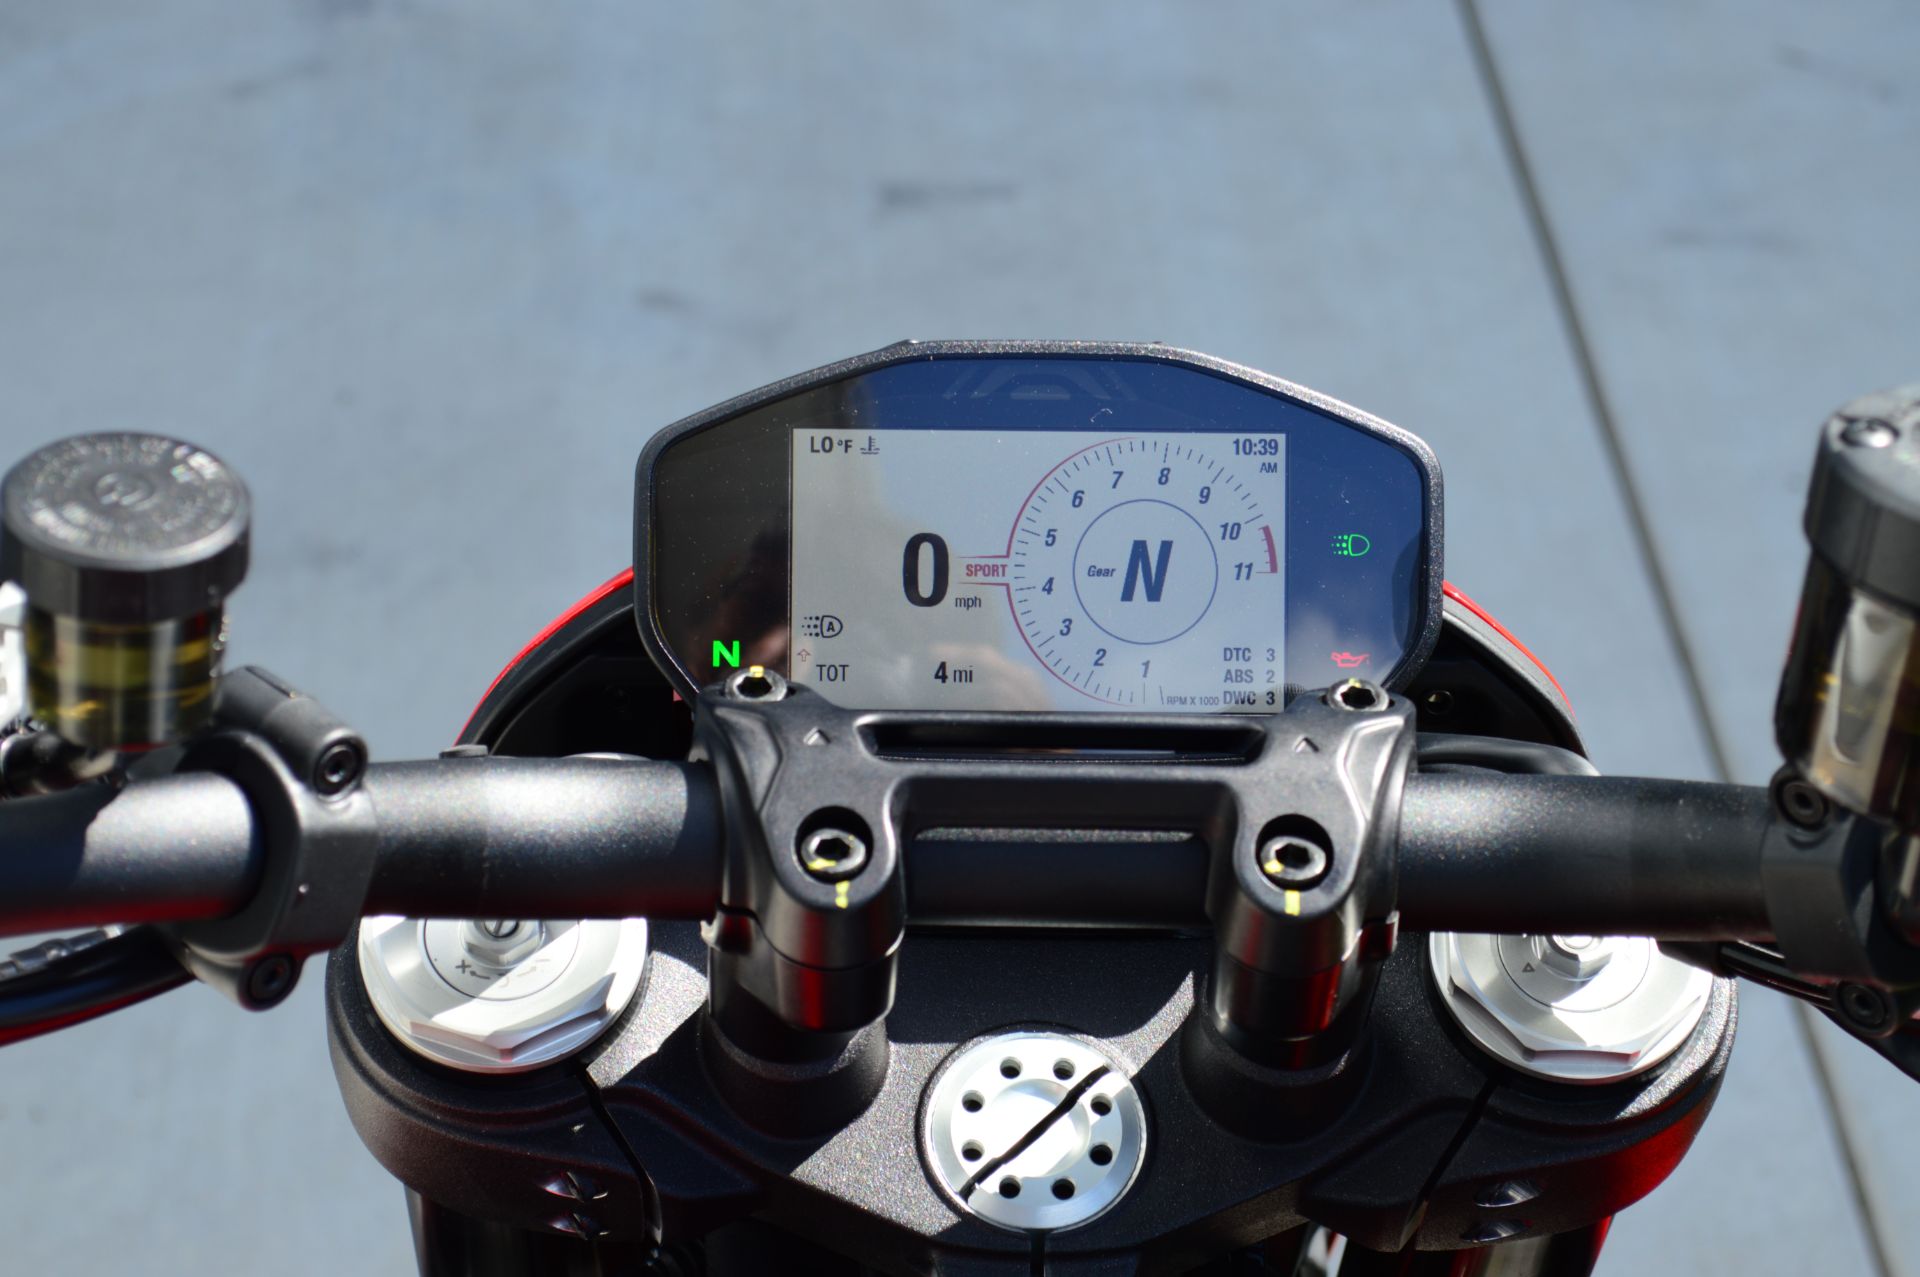 2023 Ducati Hypermotard 950 in Elk Grove, California - Photo 18